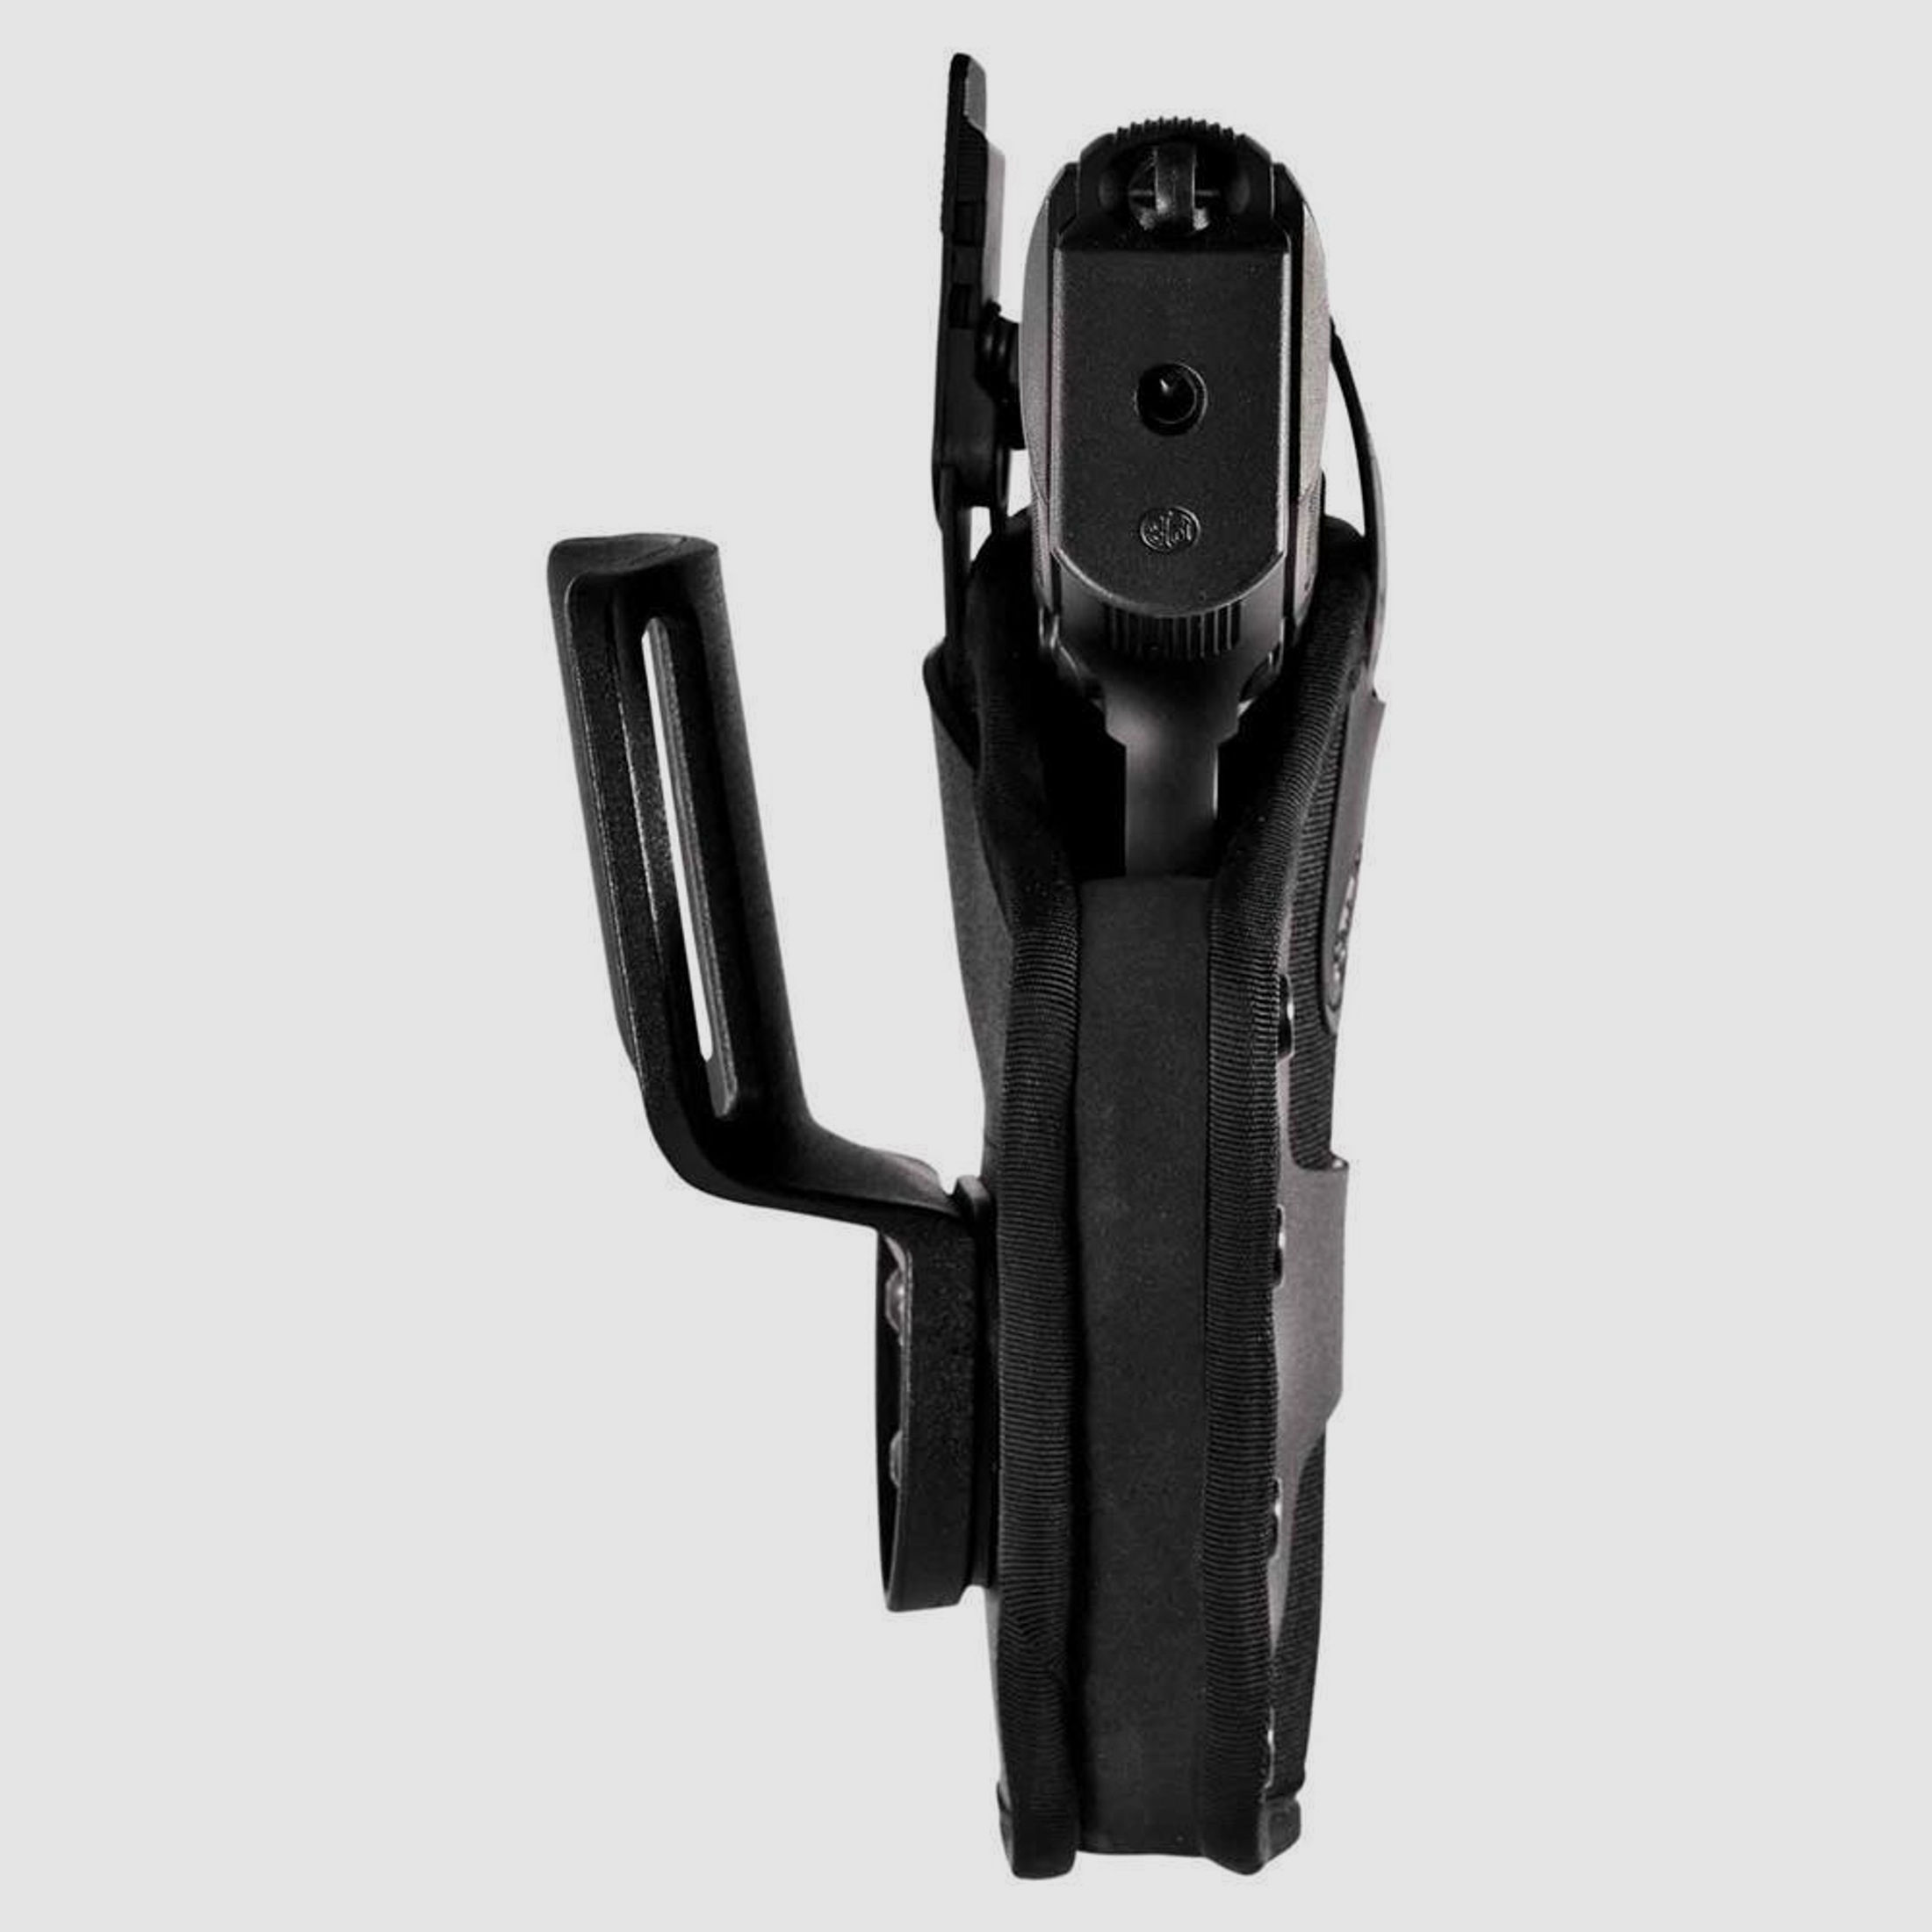 OWB-Dienstholster mit Stop-Snap-Funktion Glock 20/21/29/30/36, H&K USP/P30L, SFP9-VP9, Walther P99/PPQ/m2 Rechtshänder